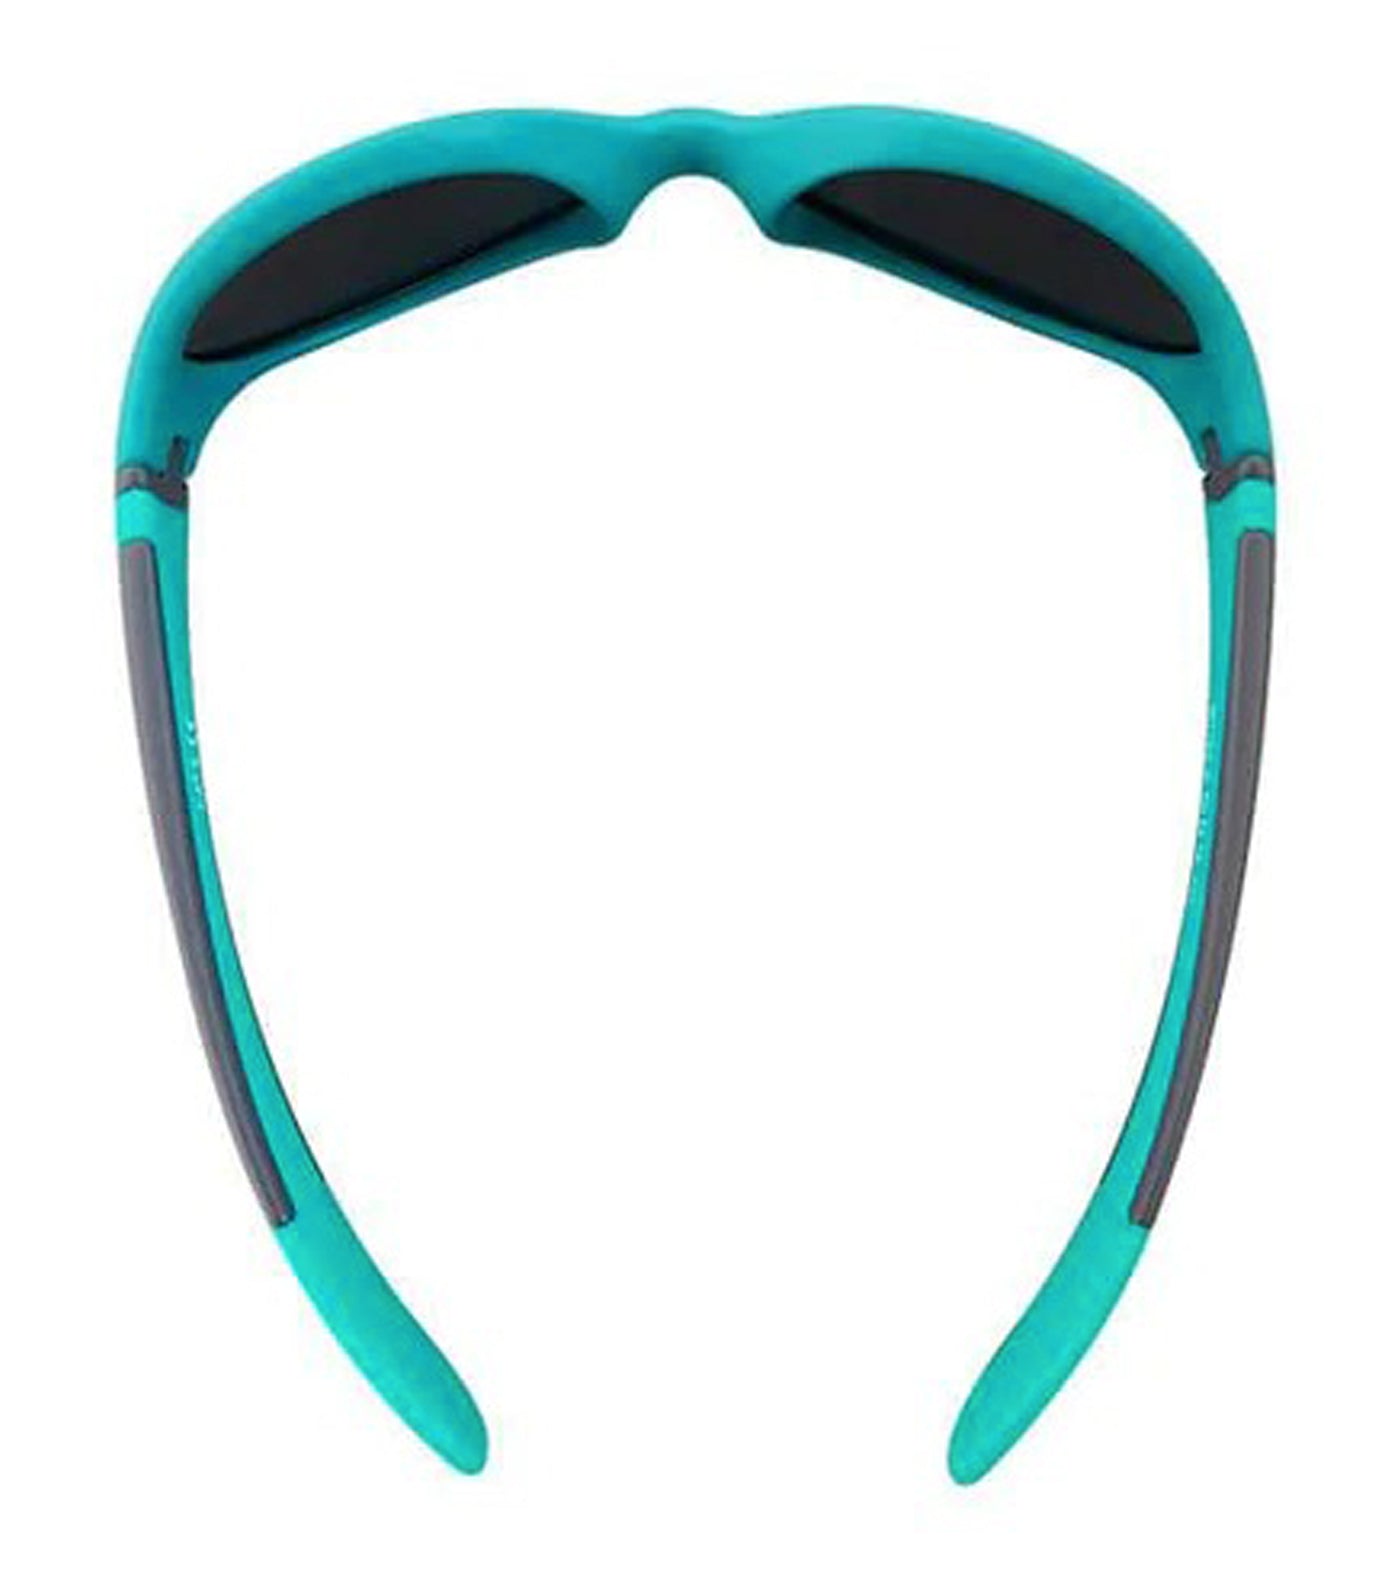 Sölar: Reversible Polarized Sunglasses - Aqua